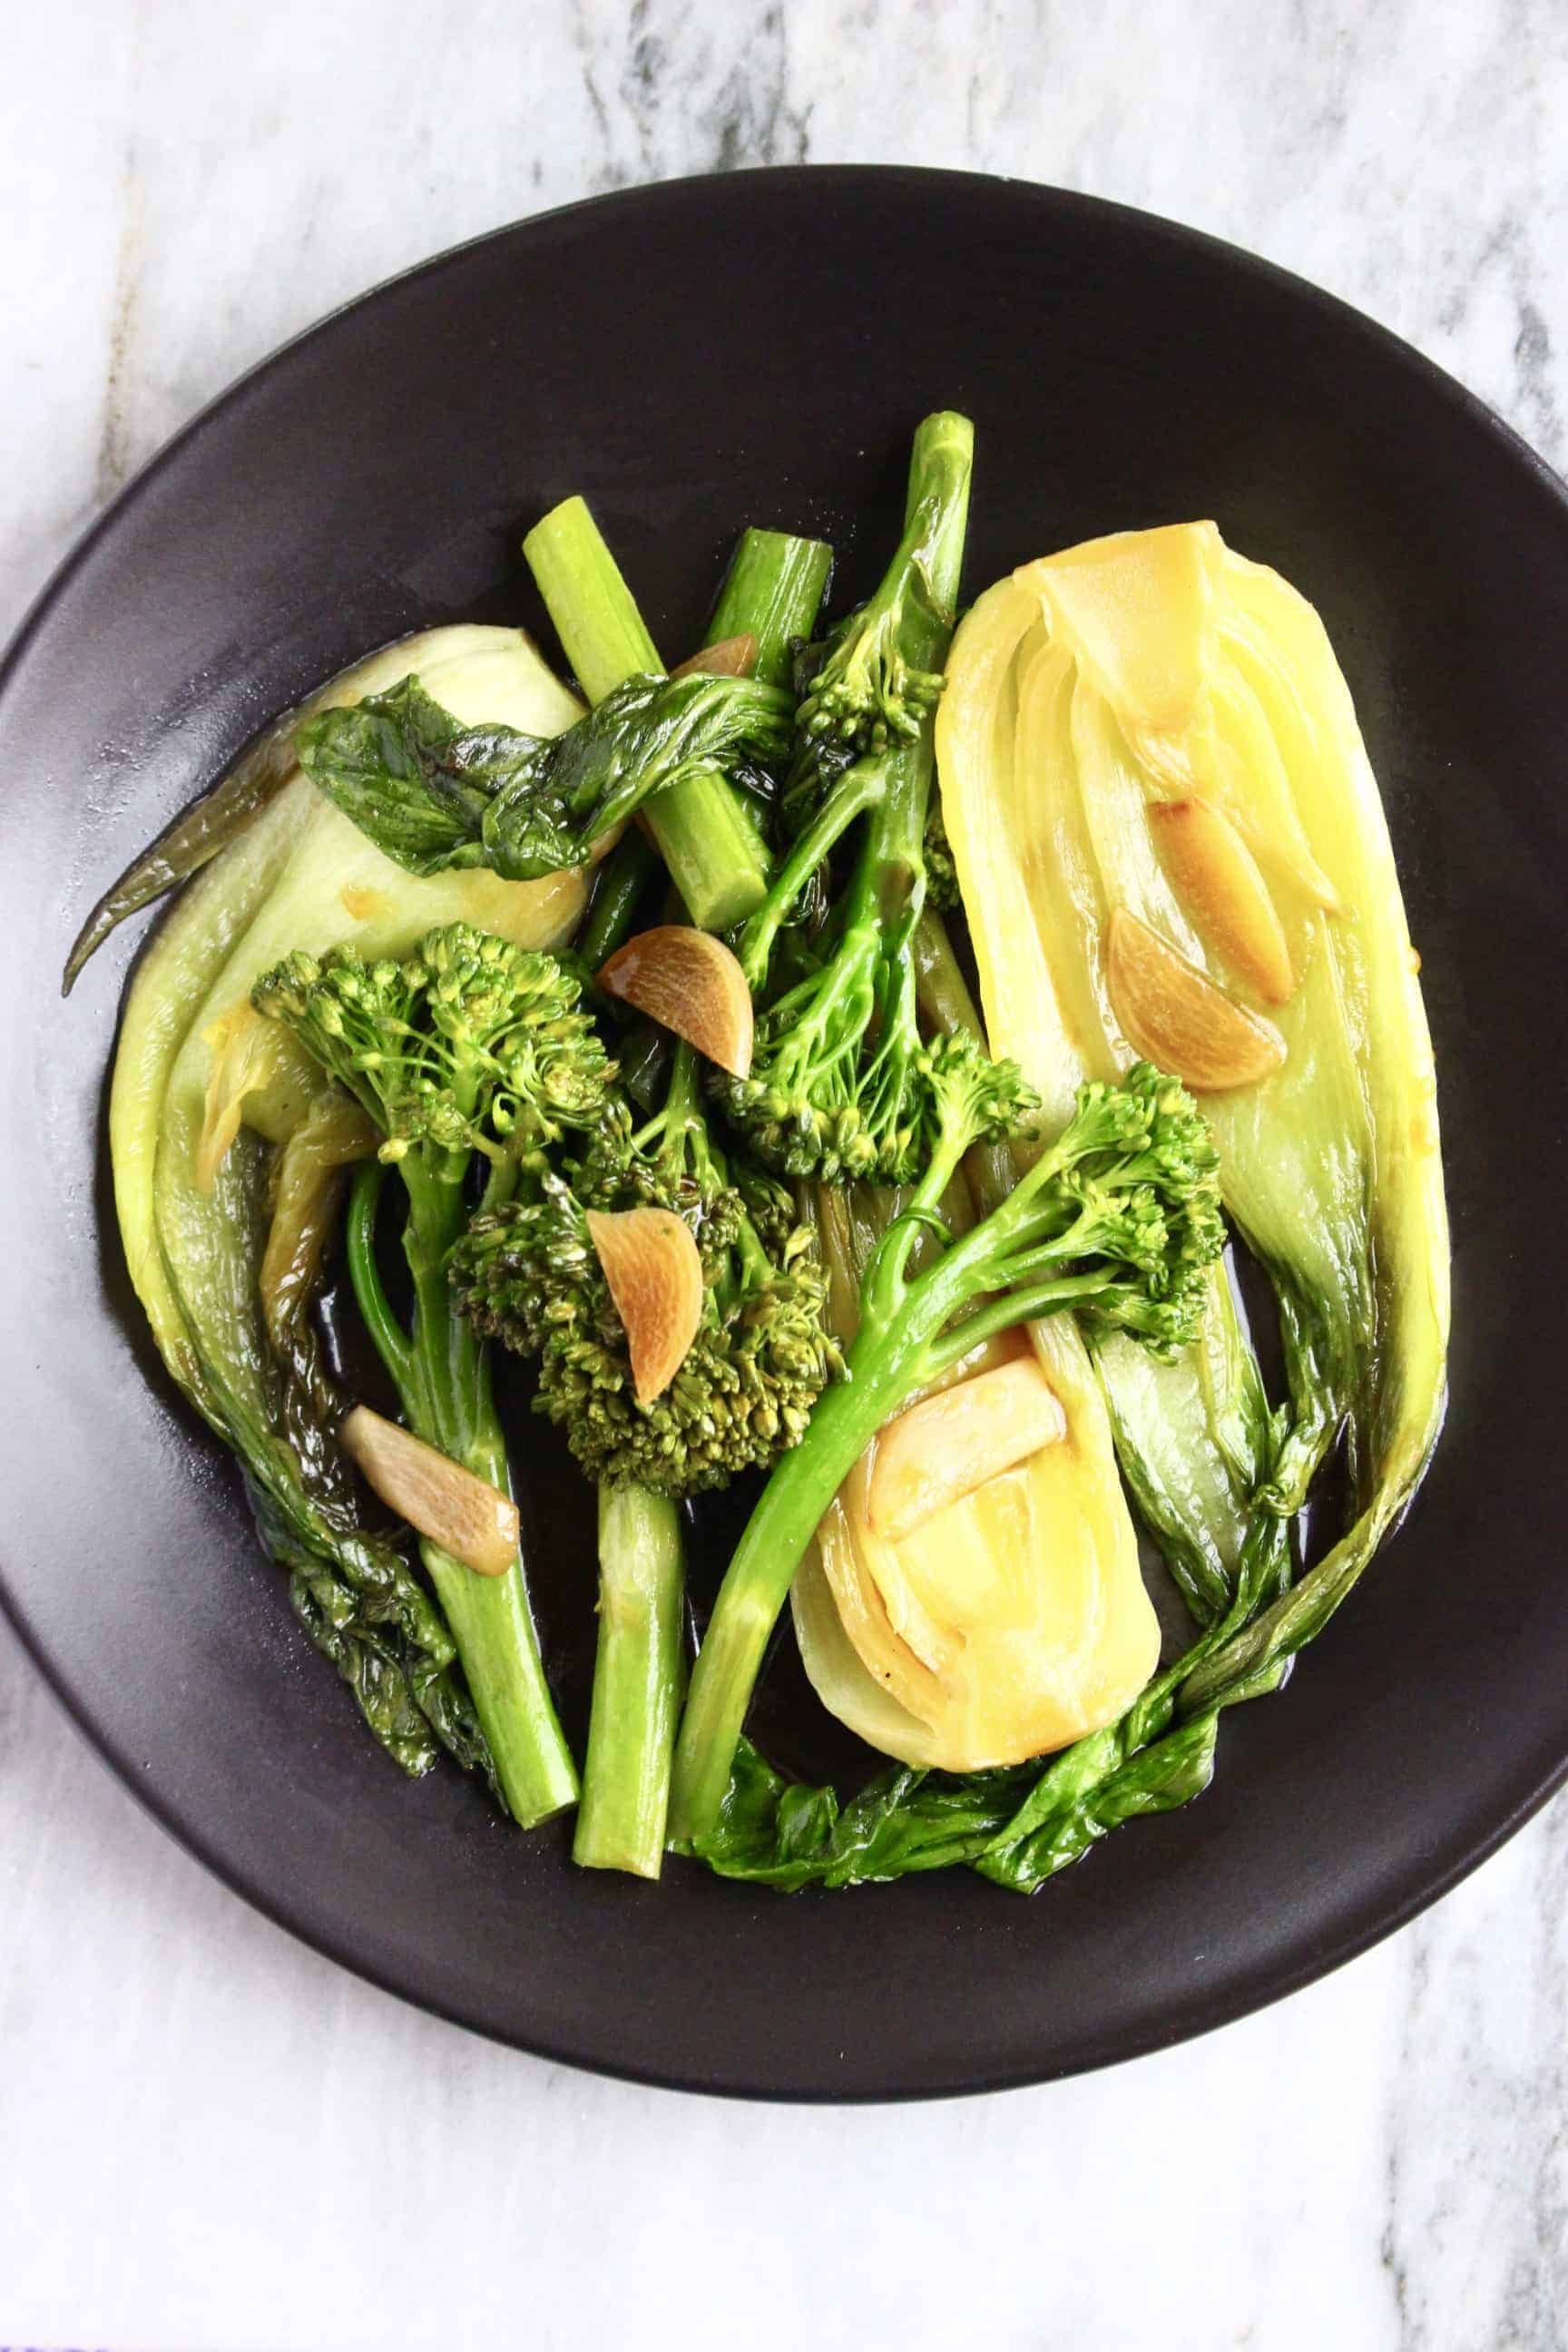 Wok-fried tenderstem broccoli, pak choi and sliced garlic on a black plate